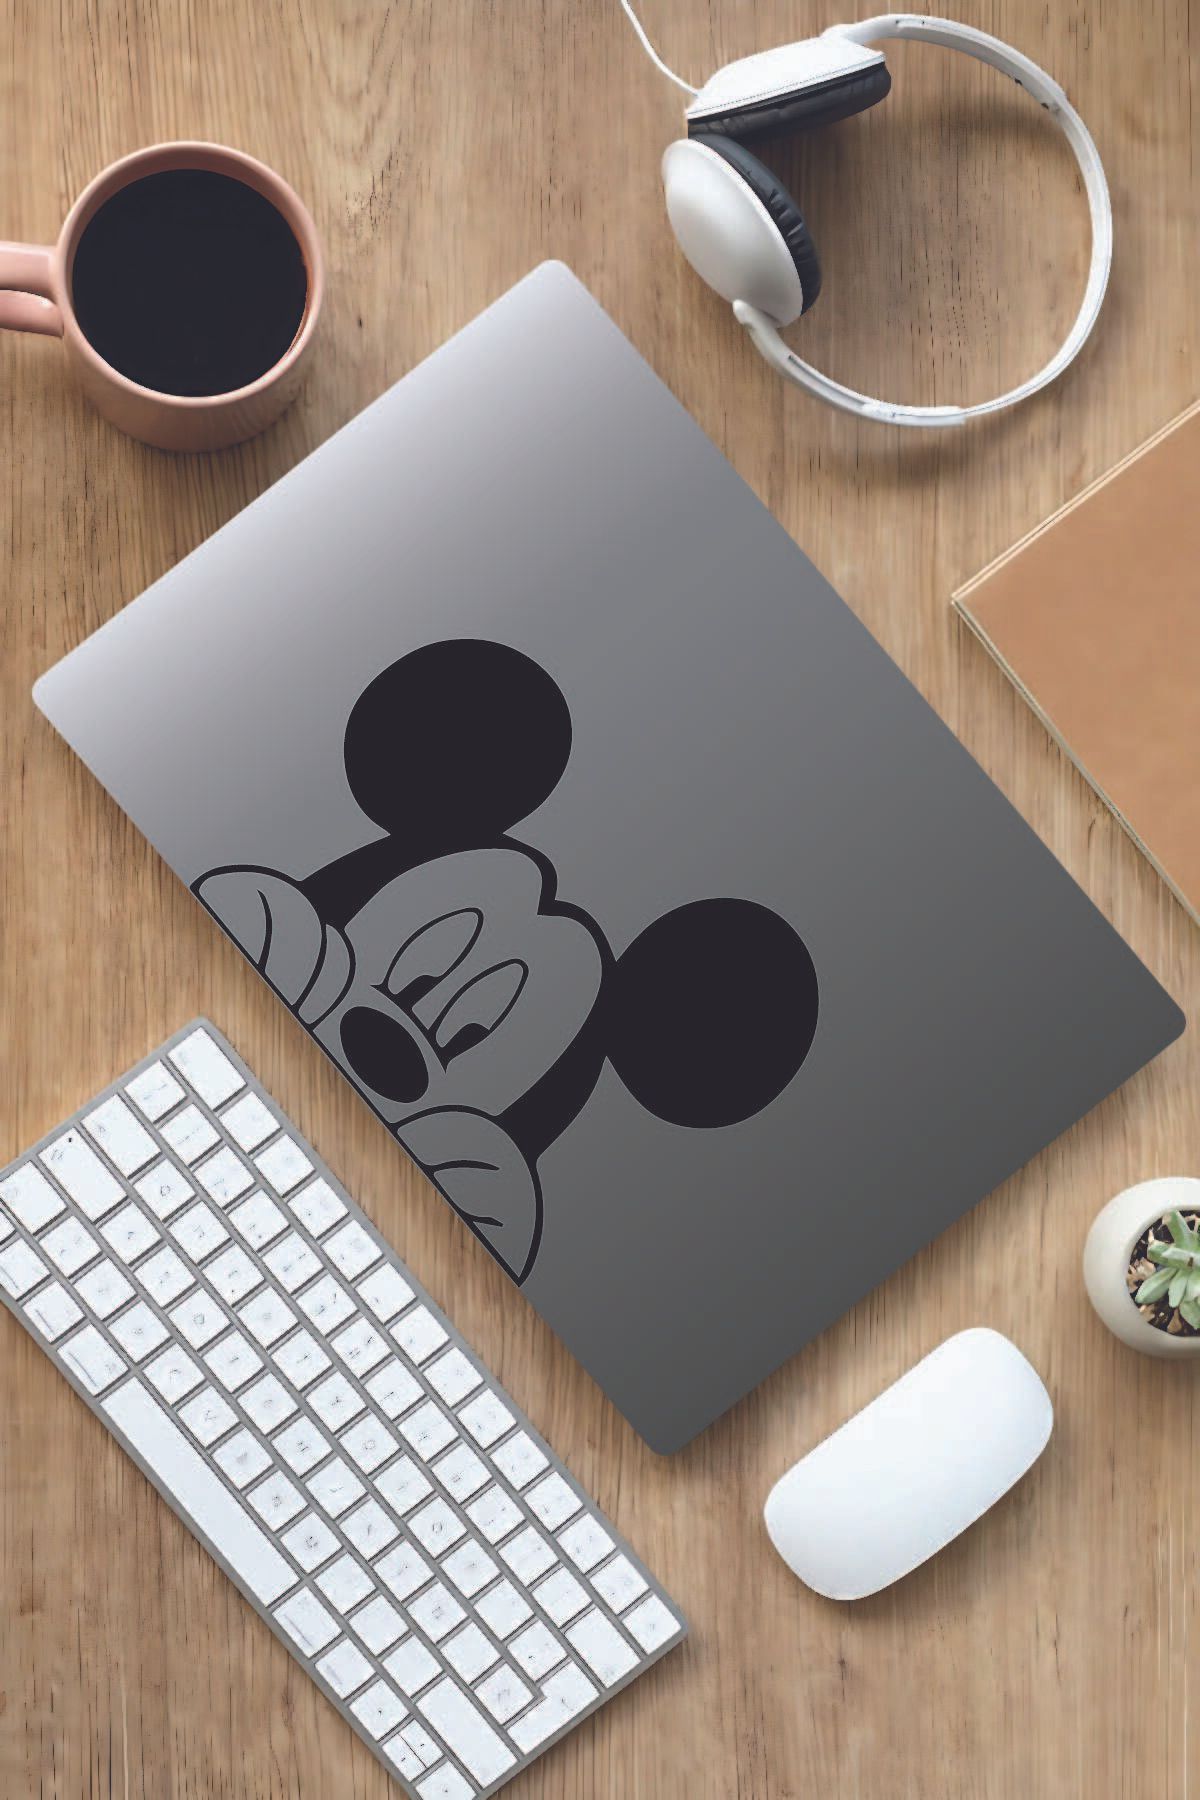 Wannart Mickey Mouse Araba Oto Laptop Cam Arma Duvar Etiket Çıkartma Siyah 20x15 Cm